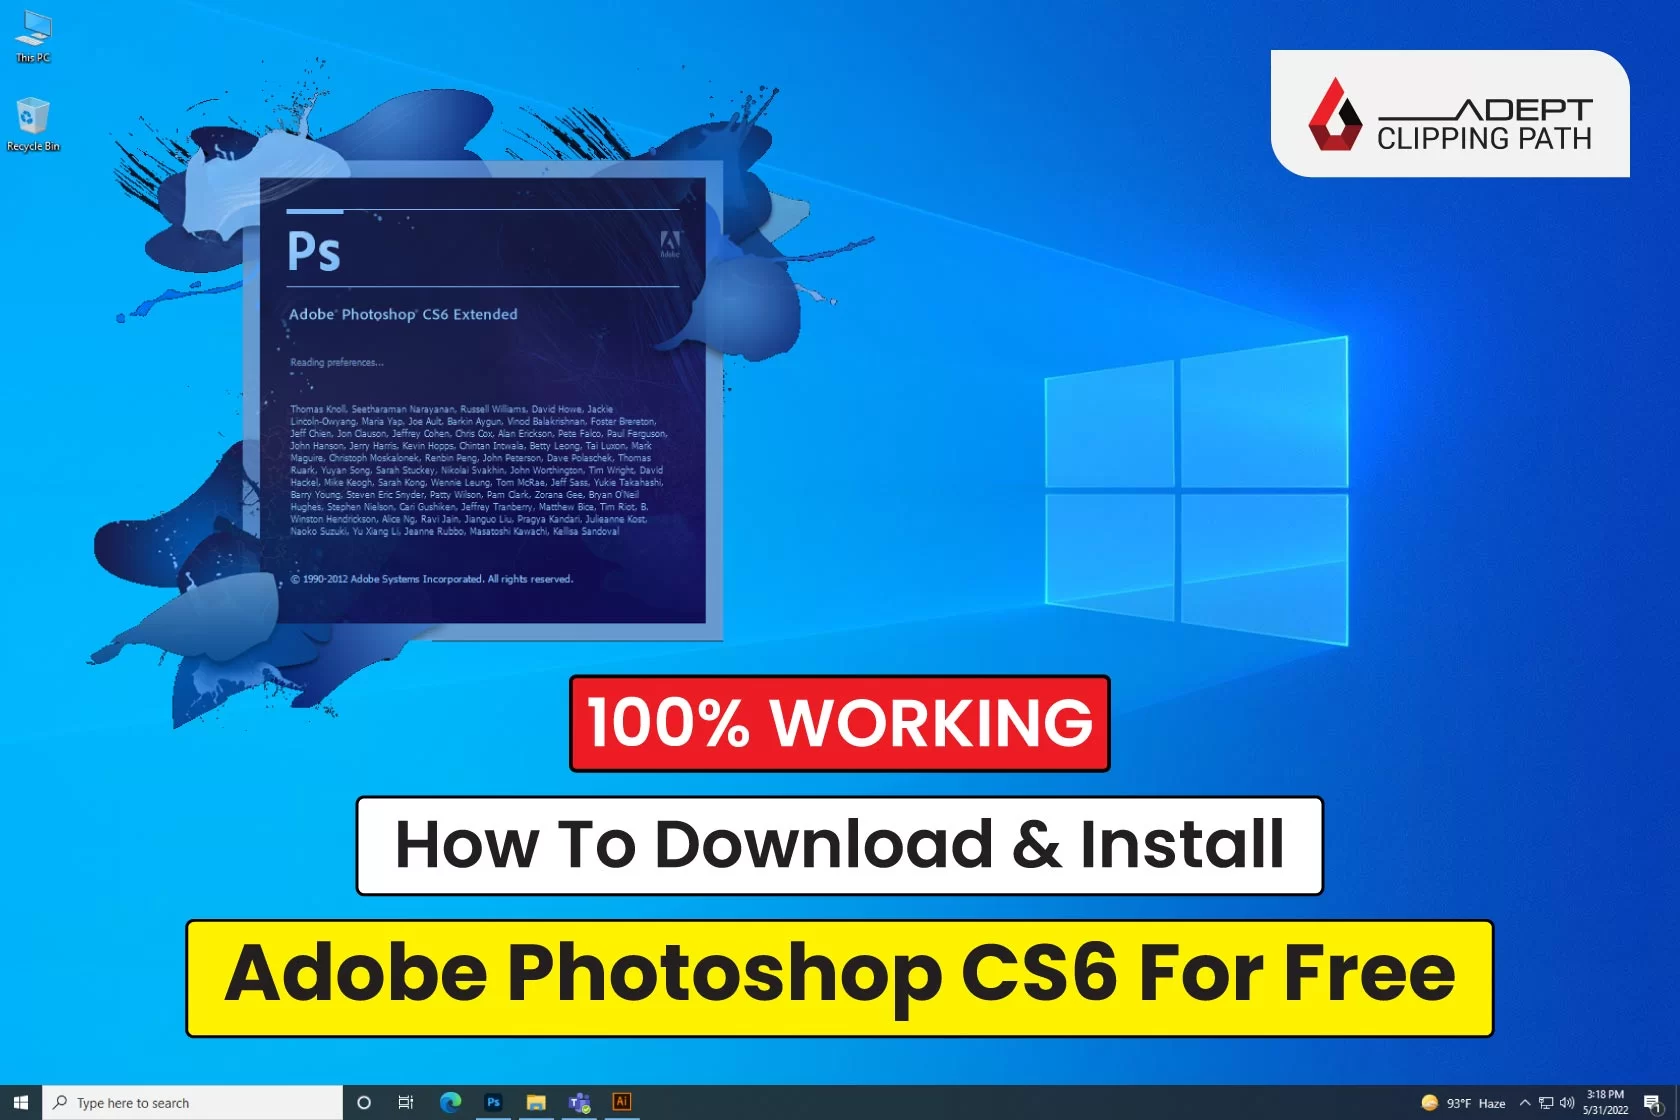 adobe photoshop cs6 full version free download for windows xp